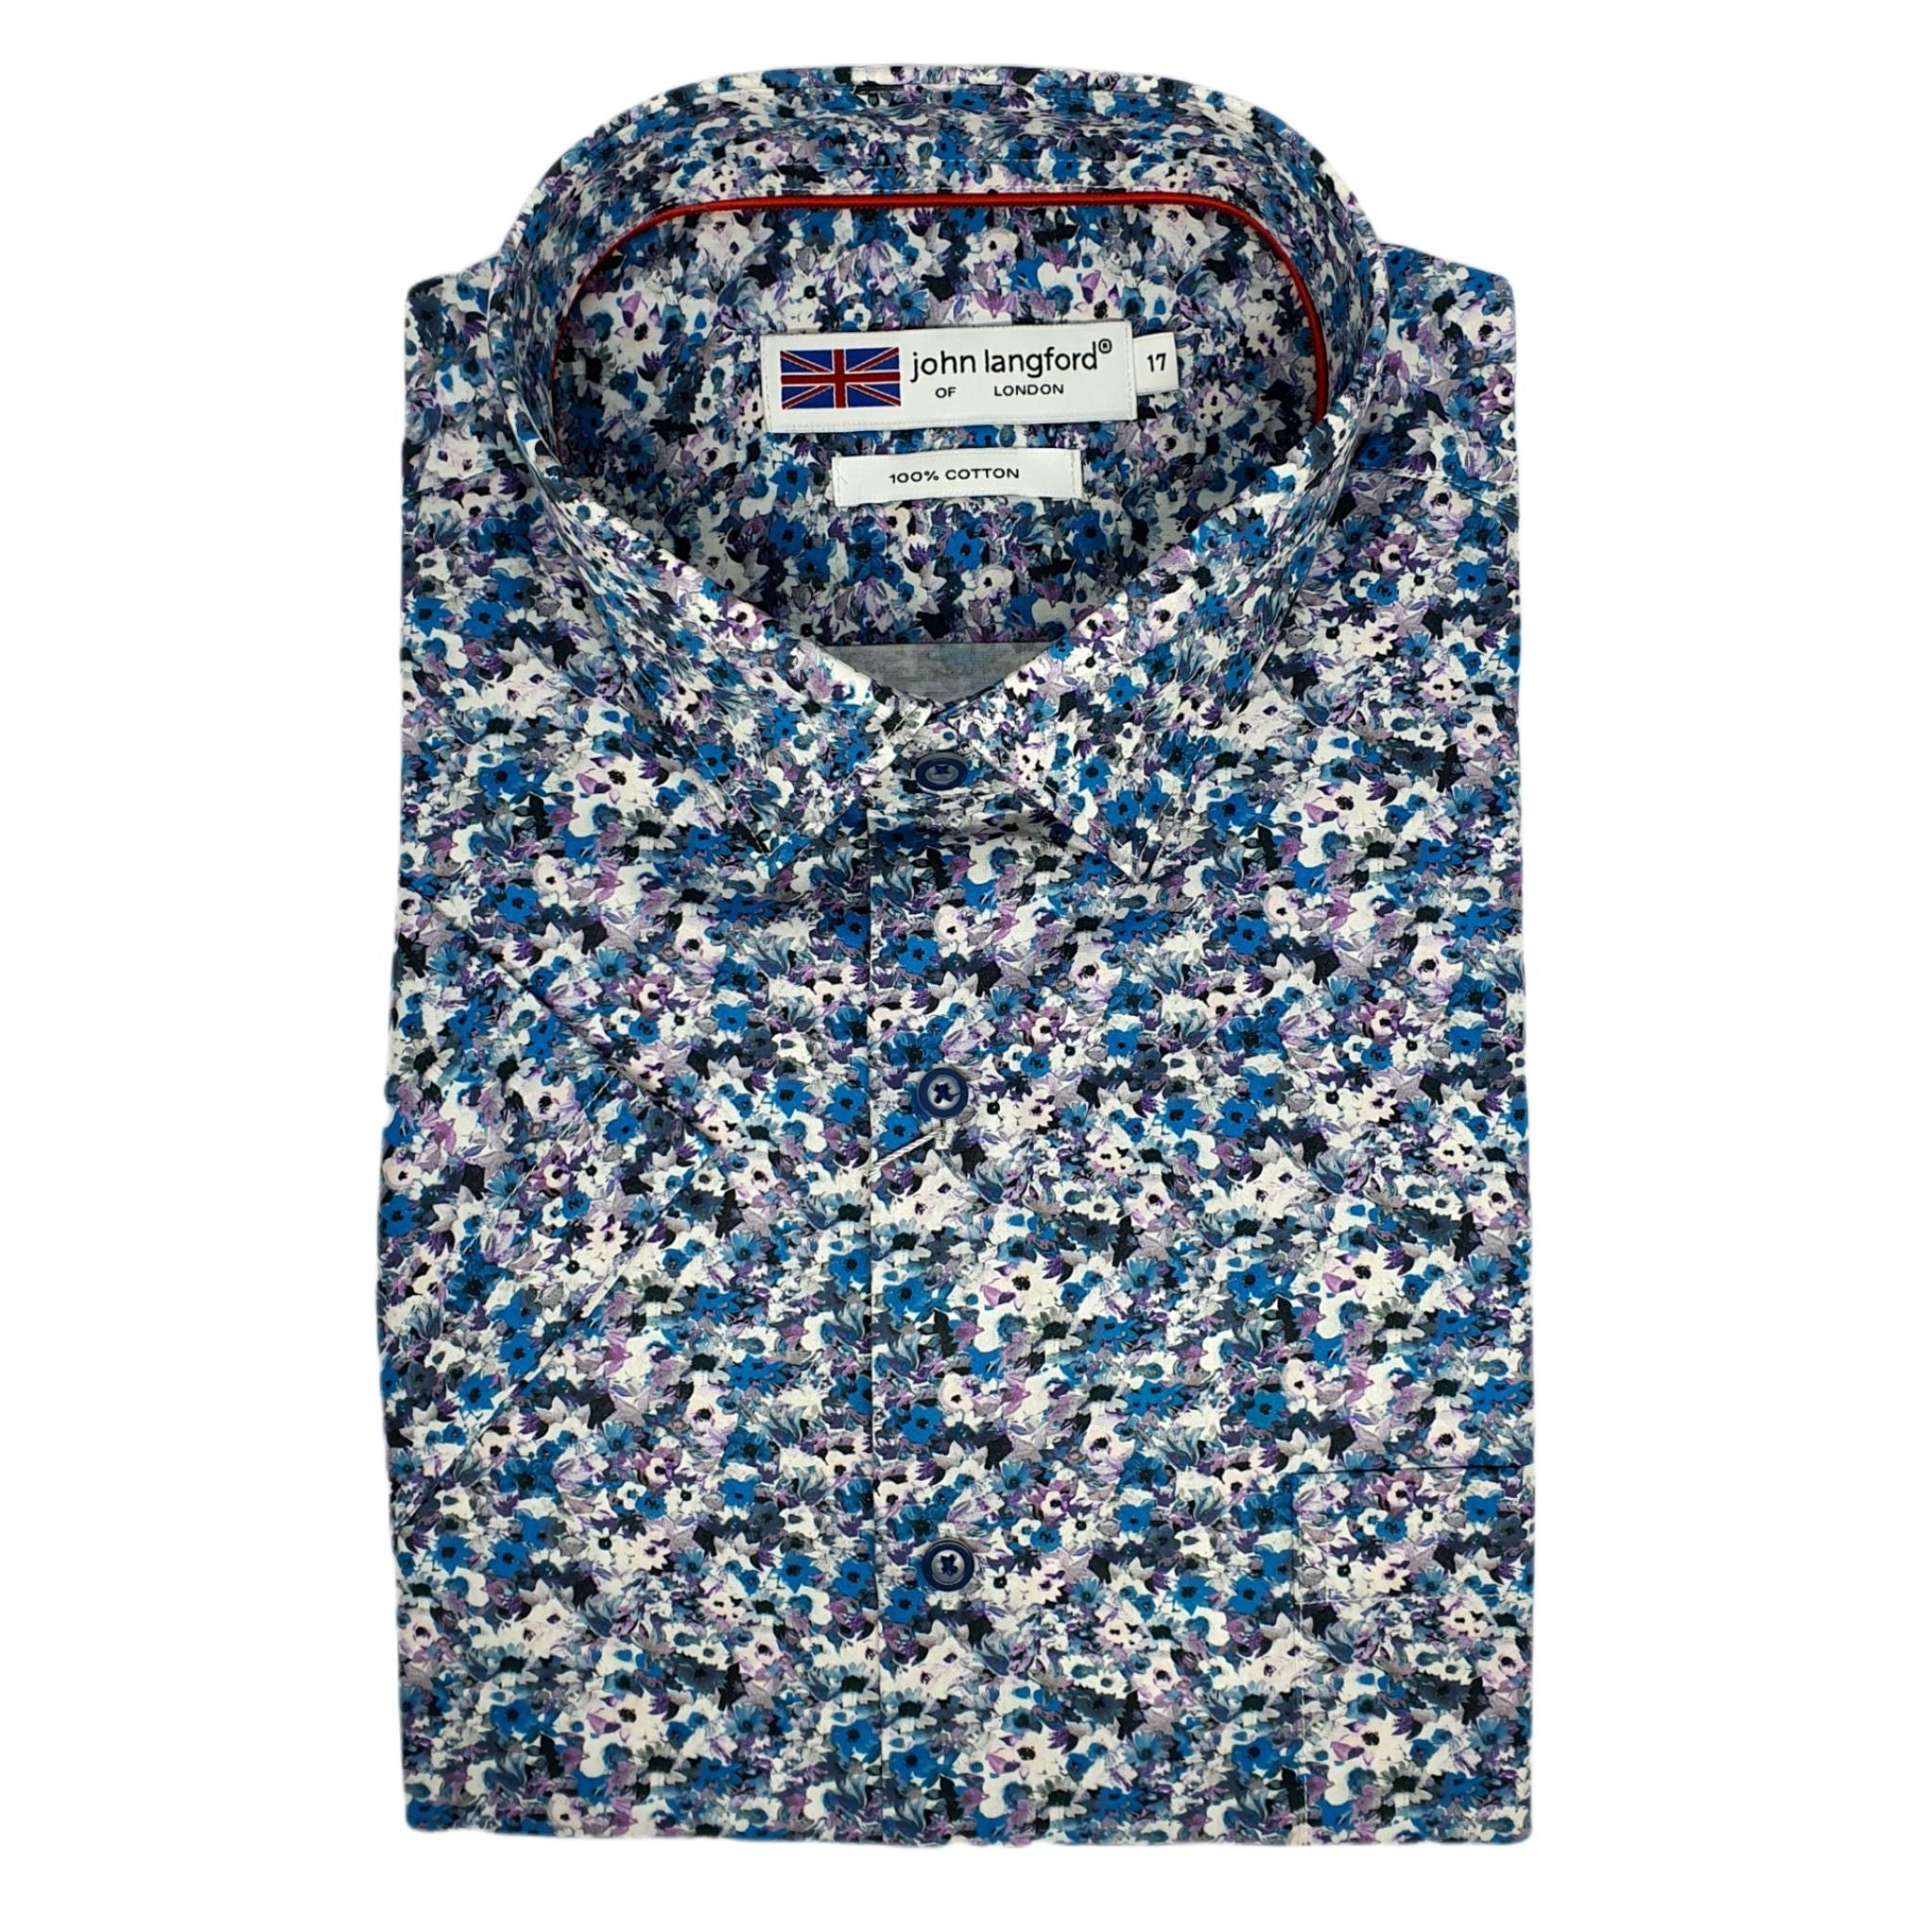 JOHN LANGFORD OF LONDON Men's Shirt - Size Medium (Navy Blue and White  Stripe)